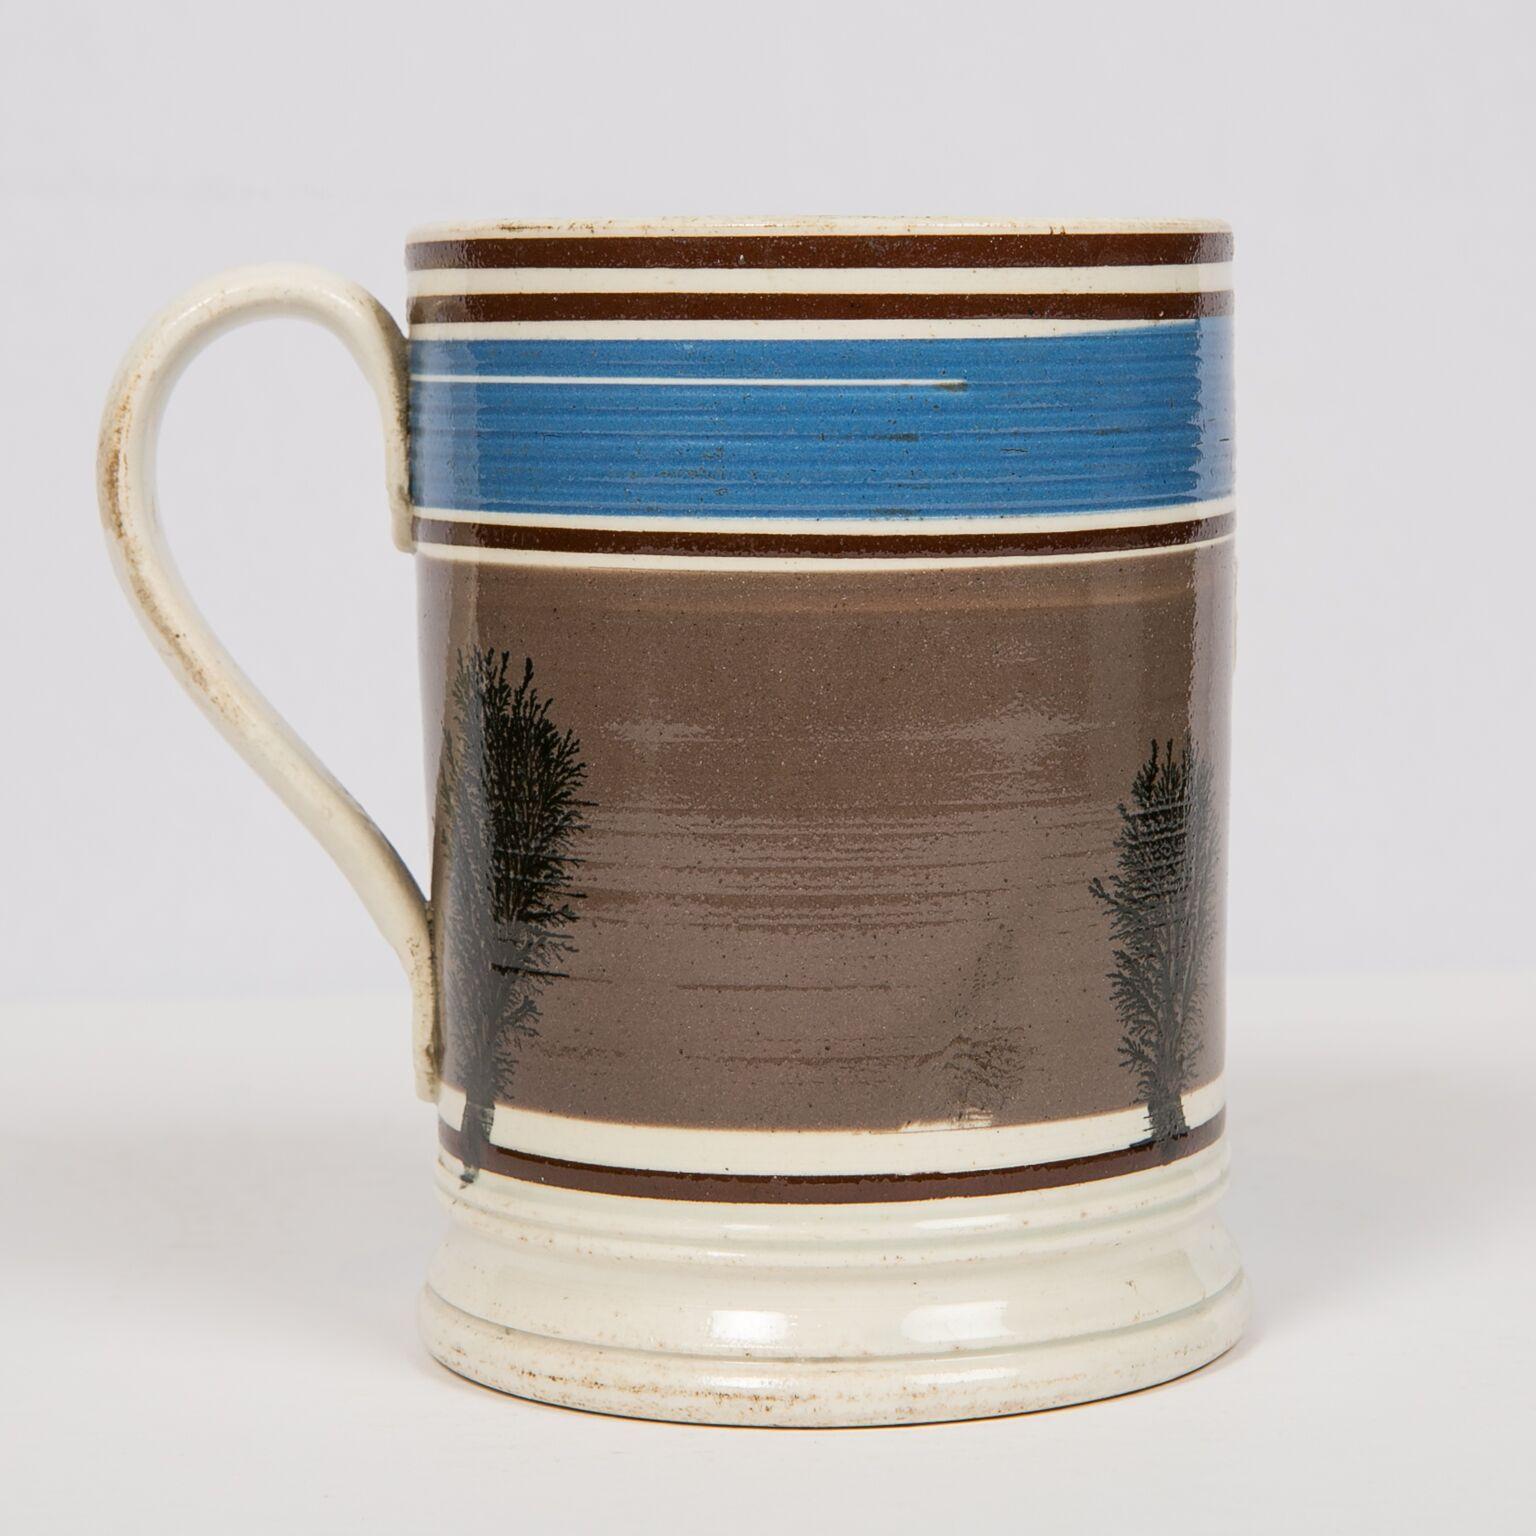 English Imperial Quart Mochaware Mug, England, circa 1840